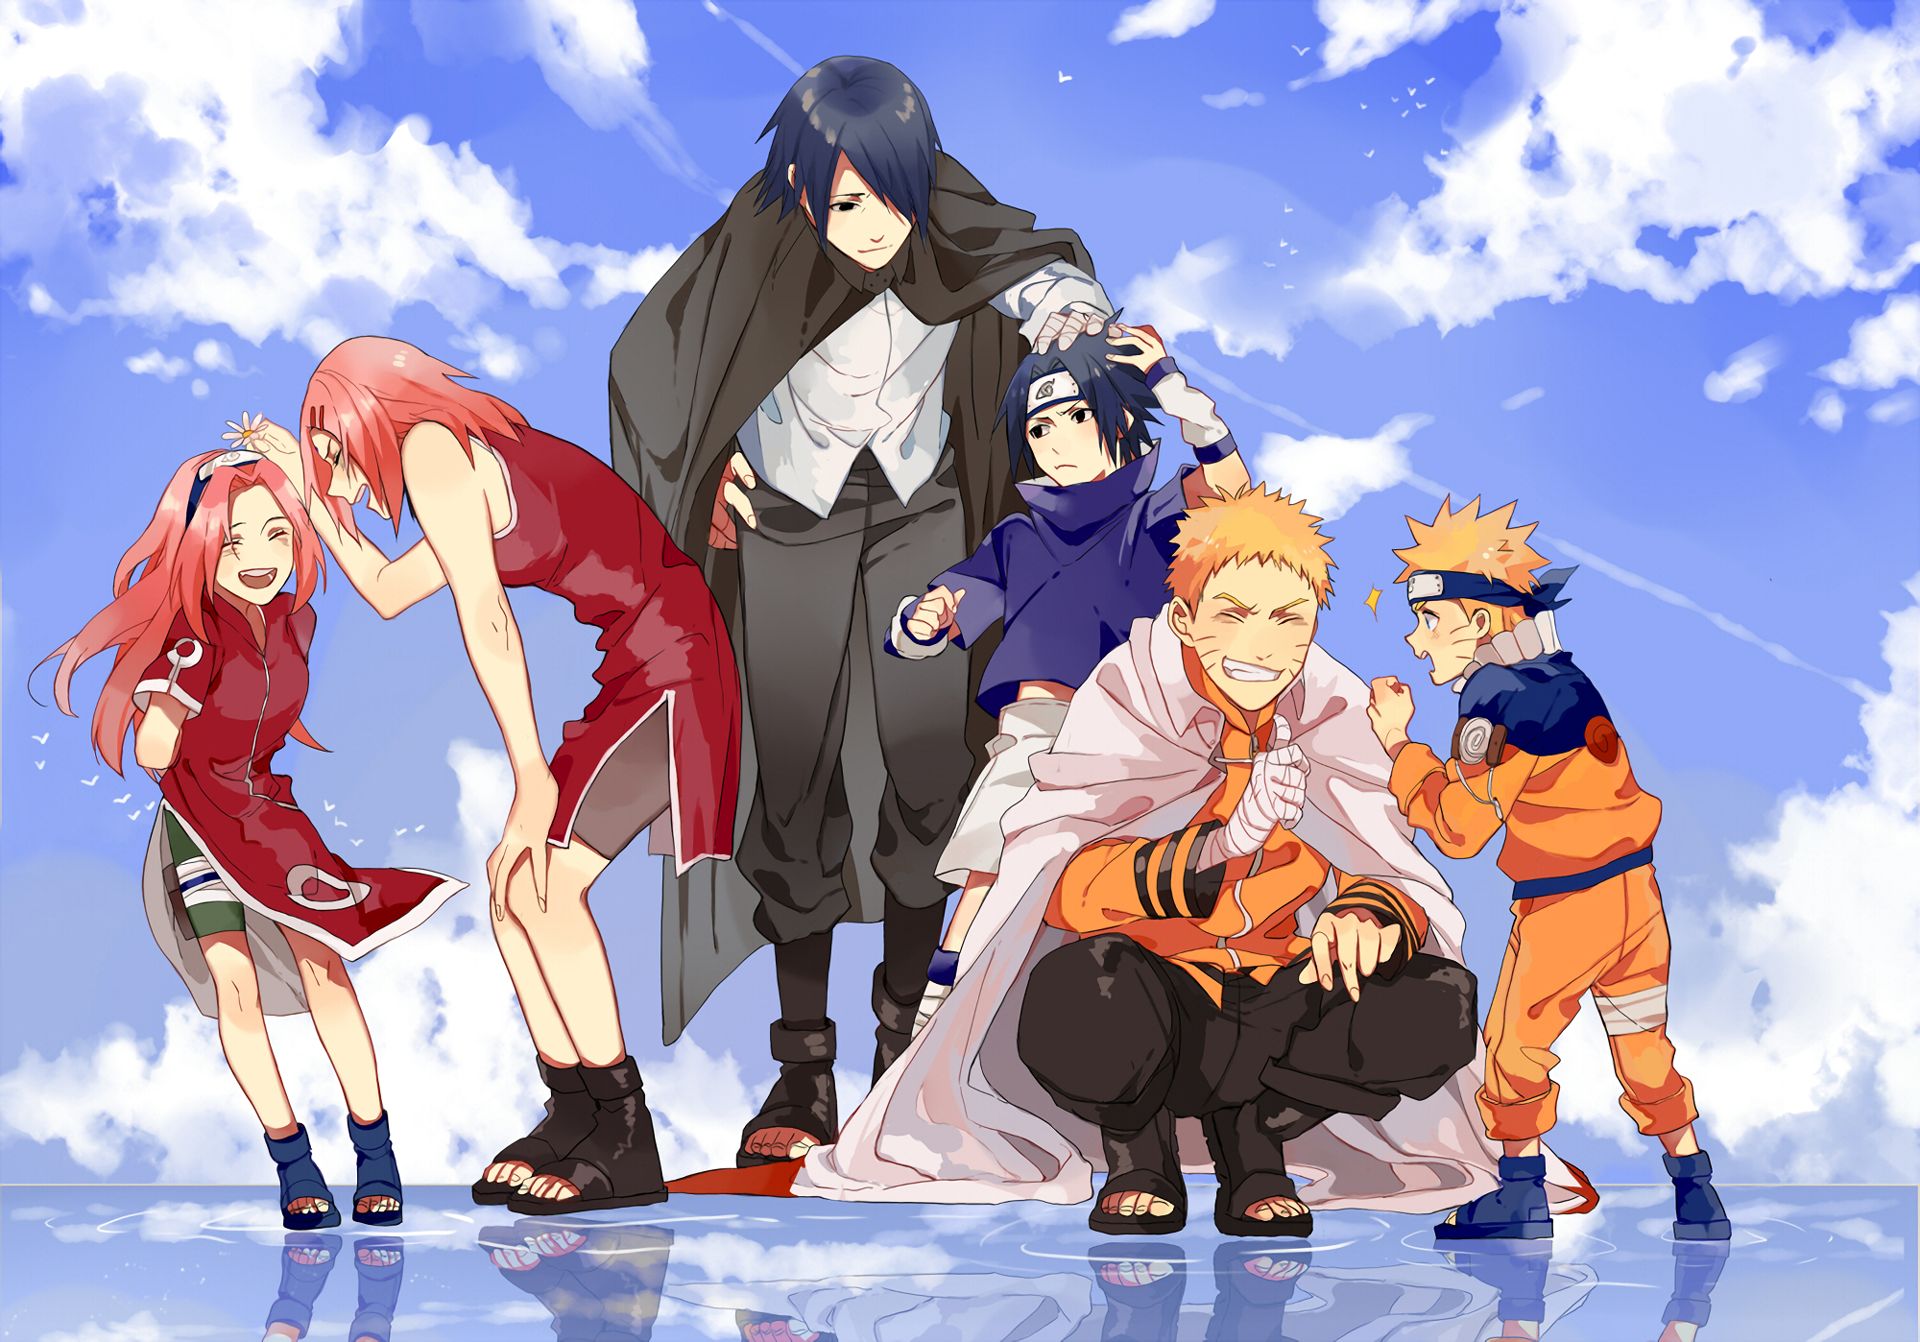 Téléchargez des papiers peints mobile Naruto, Animé, Sasuke Uchiwa, Sakura Haruno, Naruto Uzumaki gratuitement.